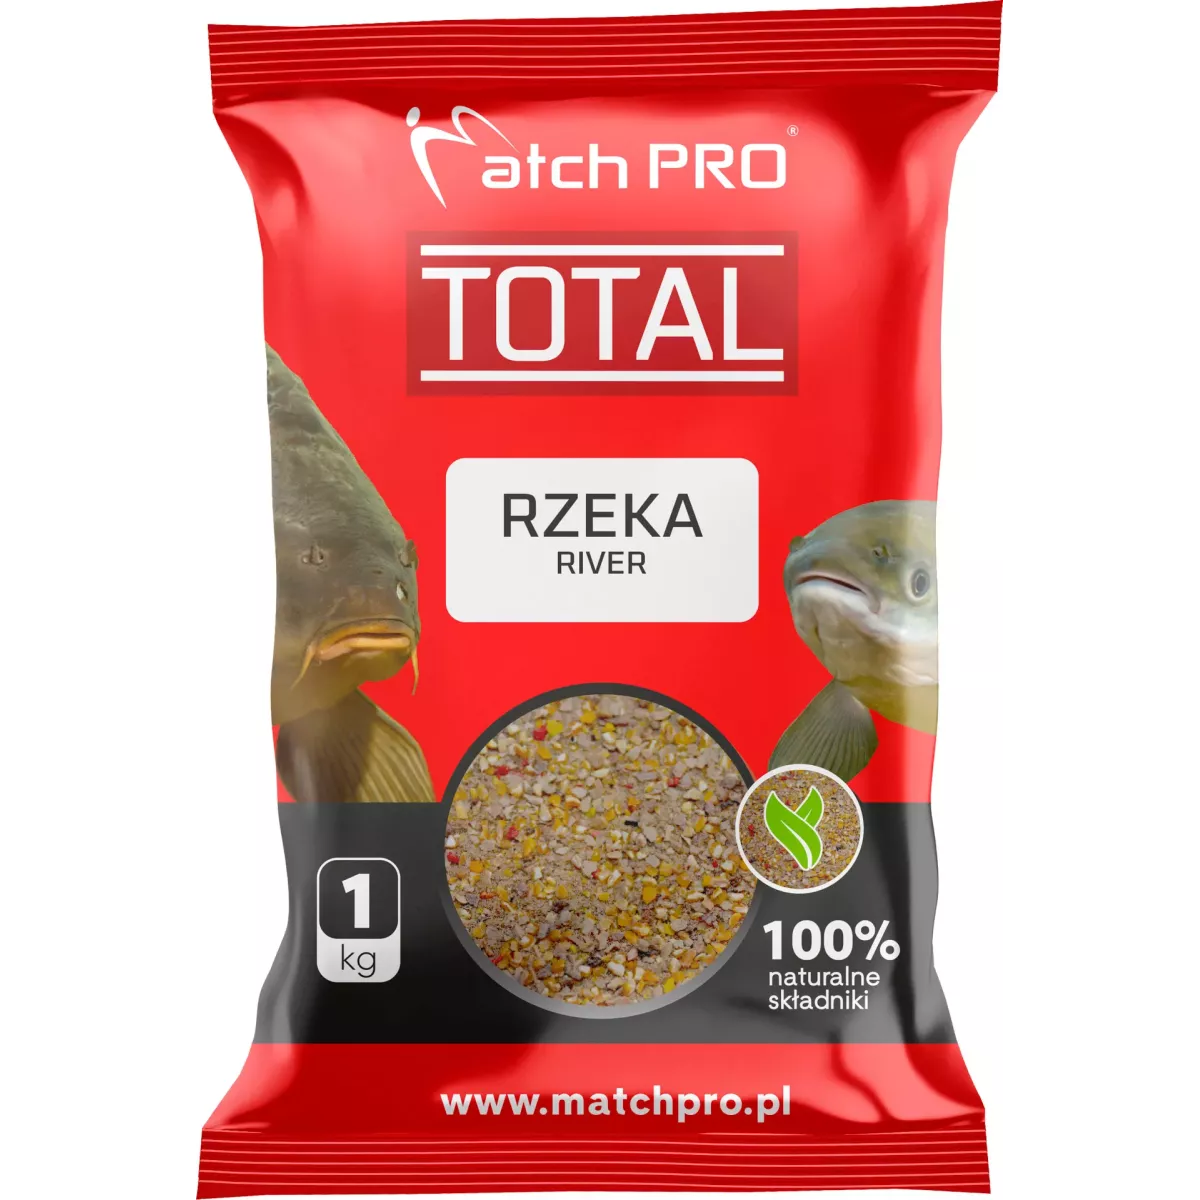 Zanęta MatchPro Total 1kg - RZEKA